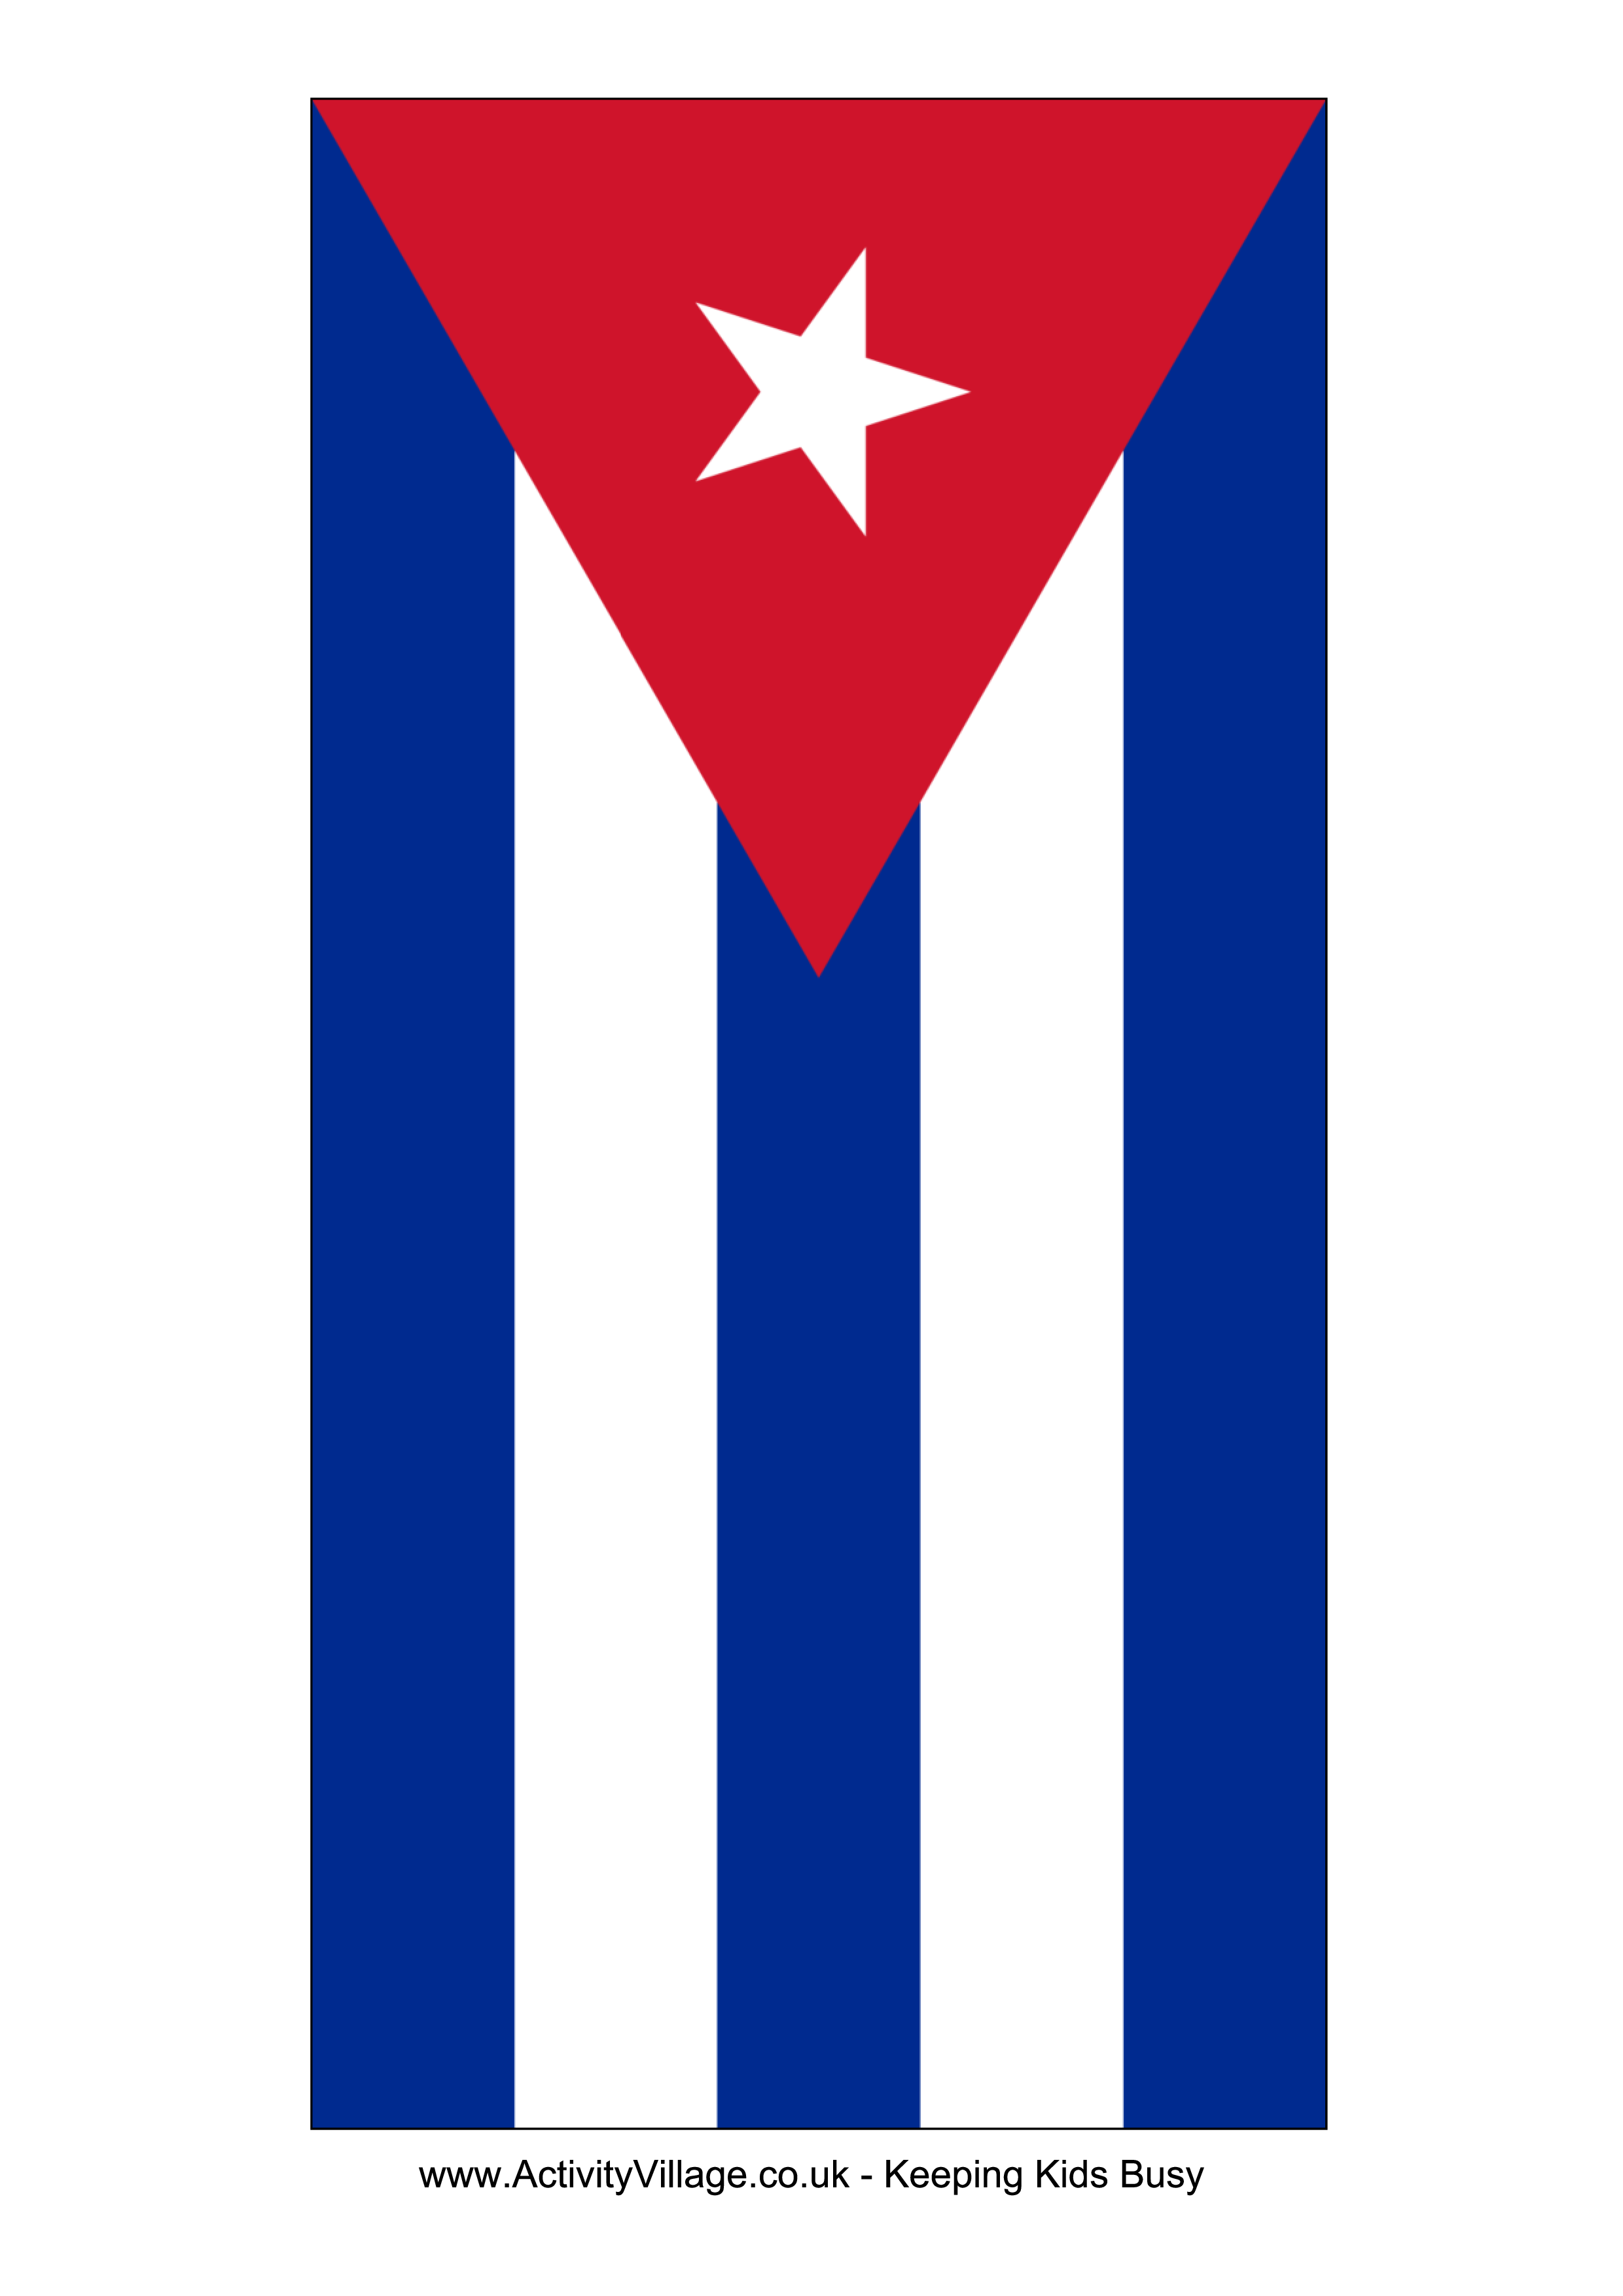 Cuba Flag PNG Free File Download